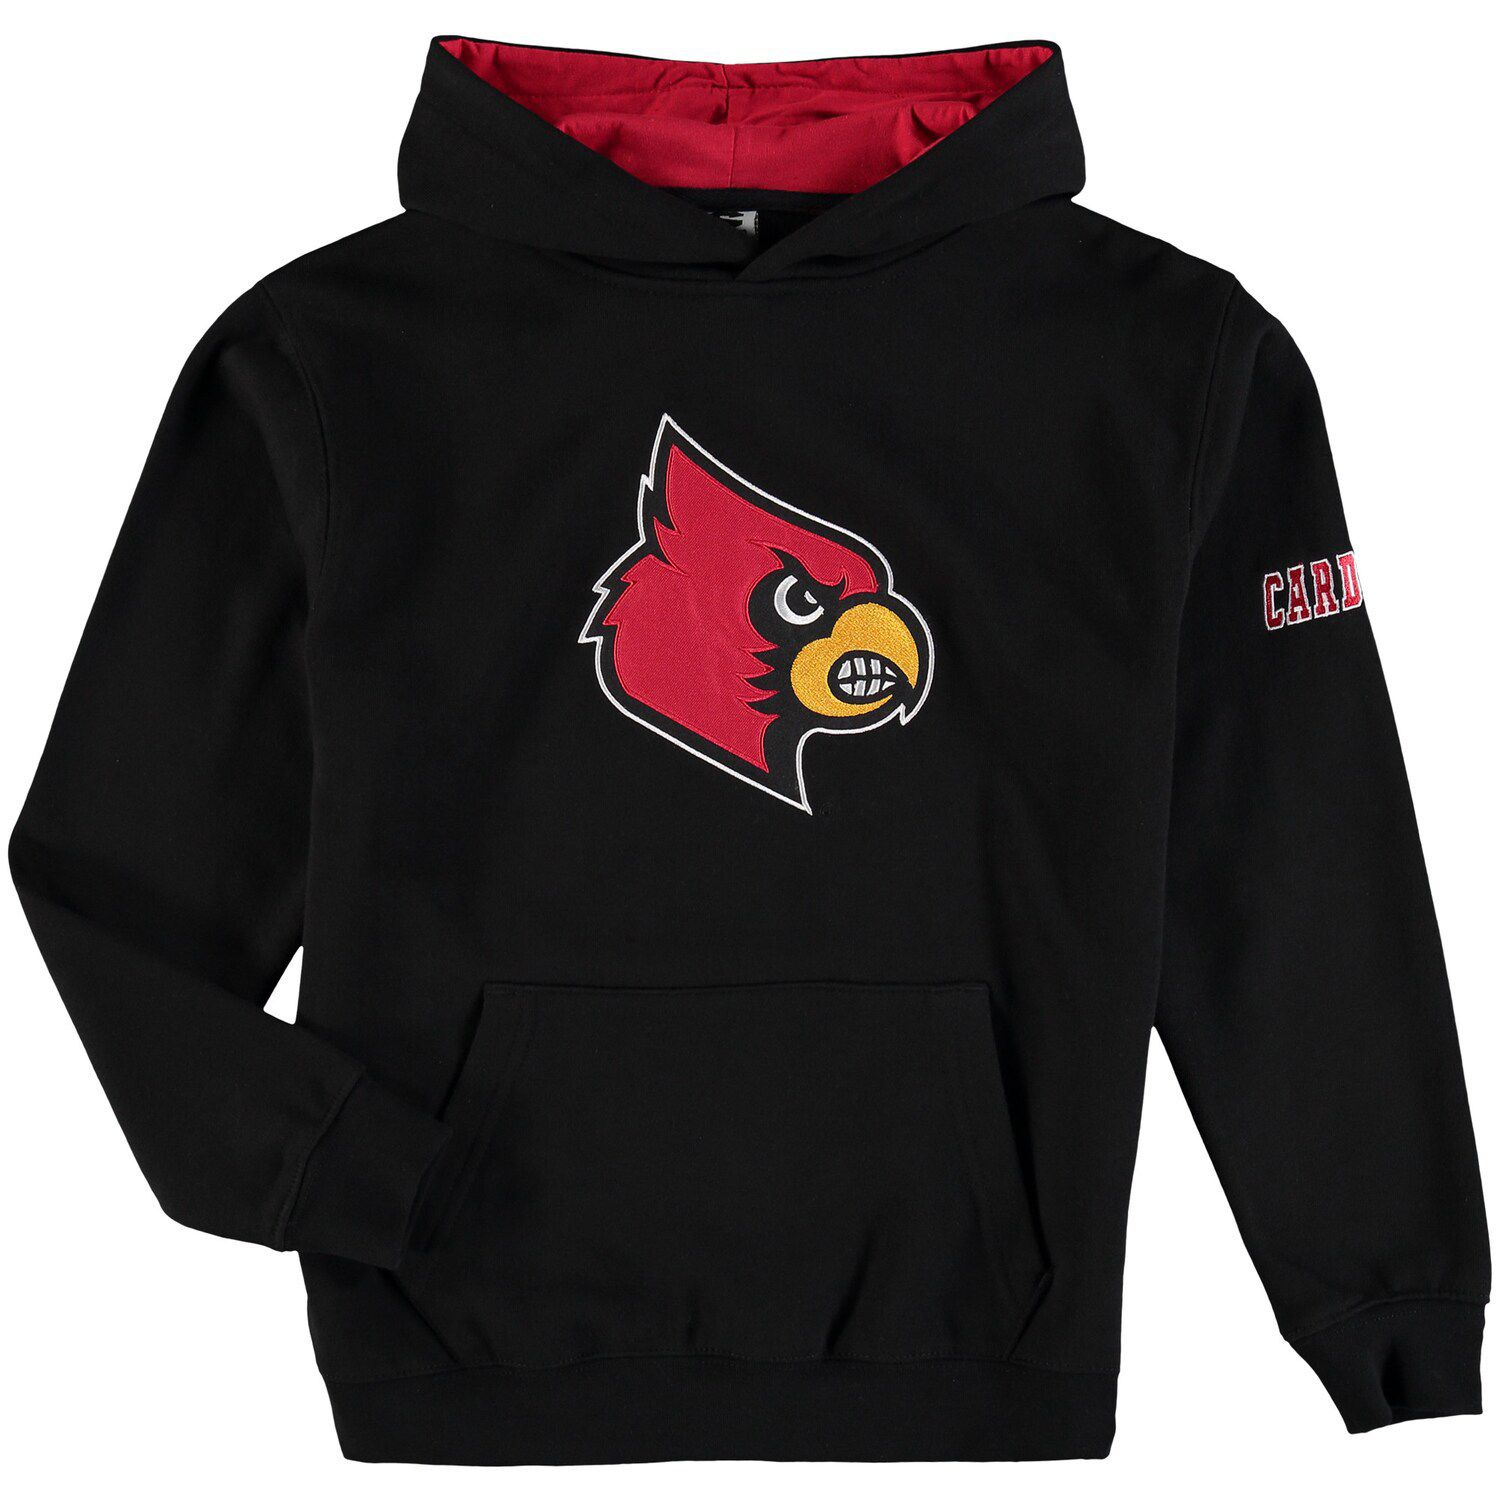 New Louisville Cardinals Womens Sizes S-M-L-XL-2XL Red Hoodie $50